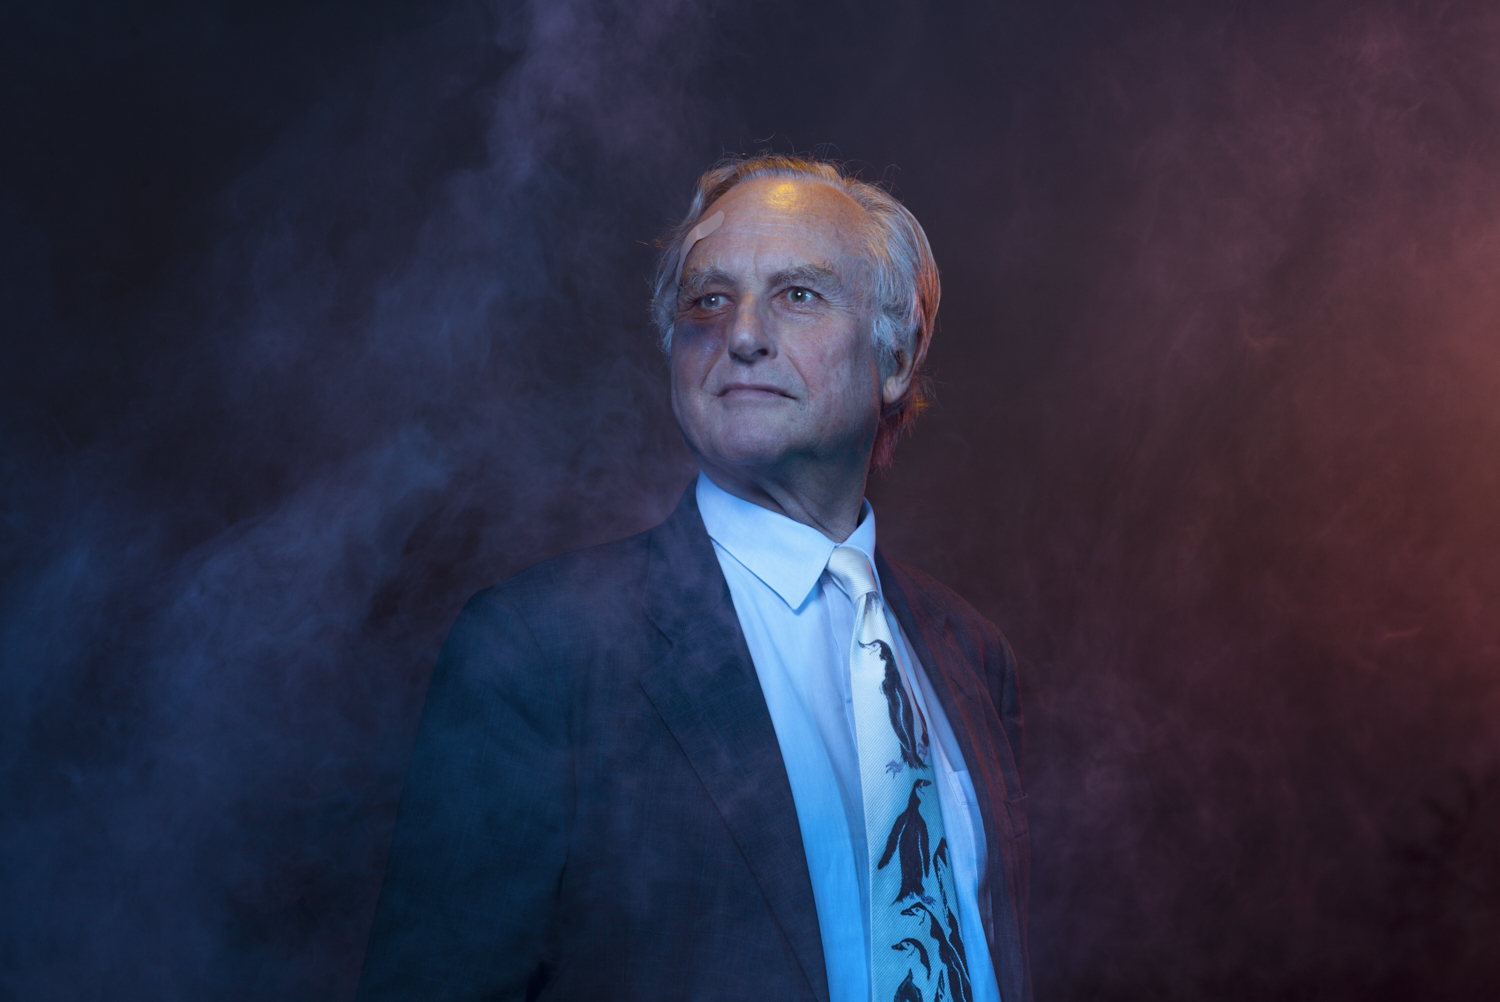 Richard Dawkins 